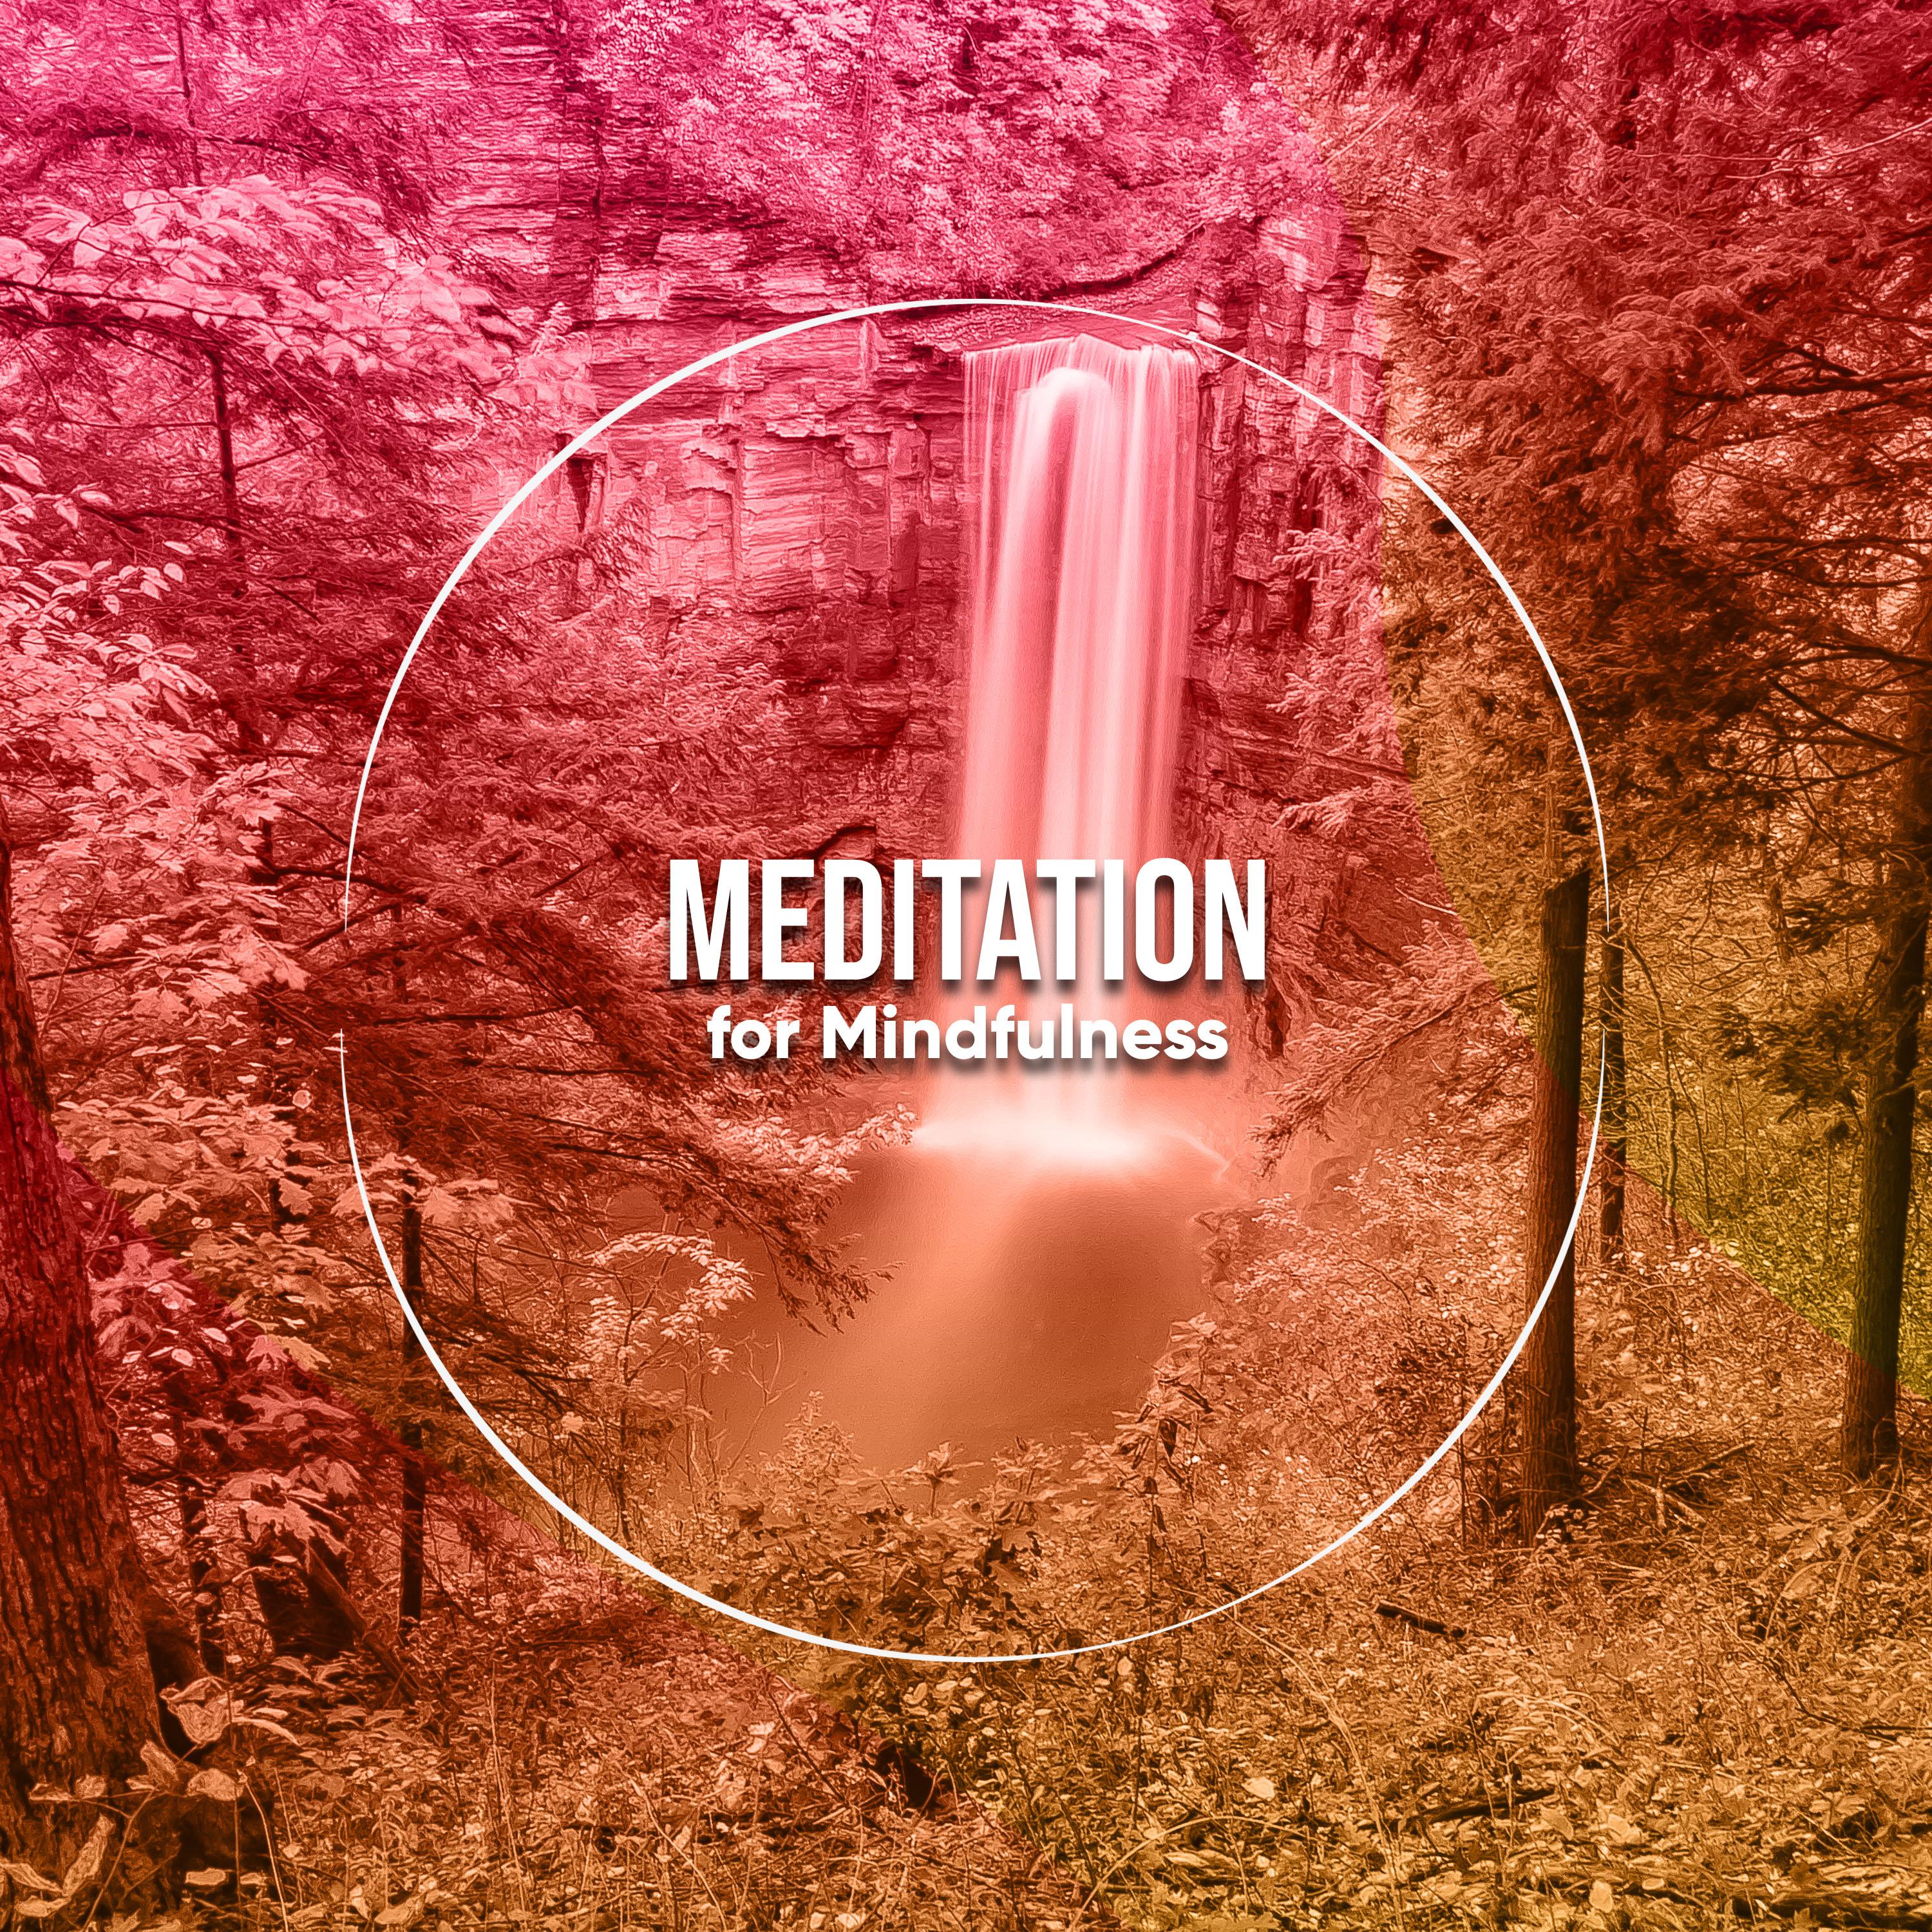 12 Asian Meditation Sounds for Mindfulness